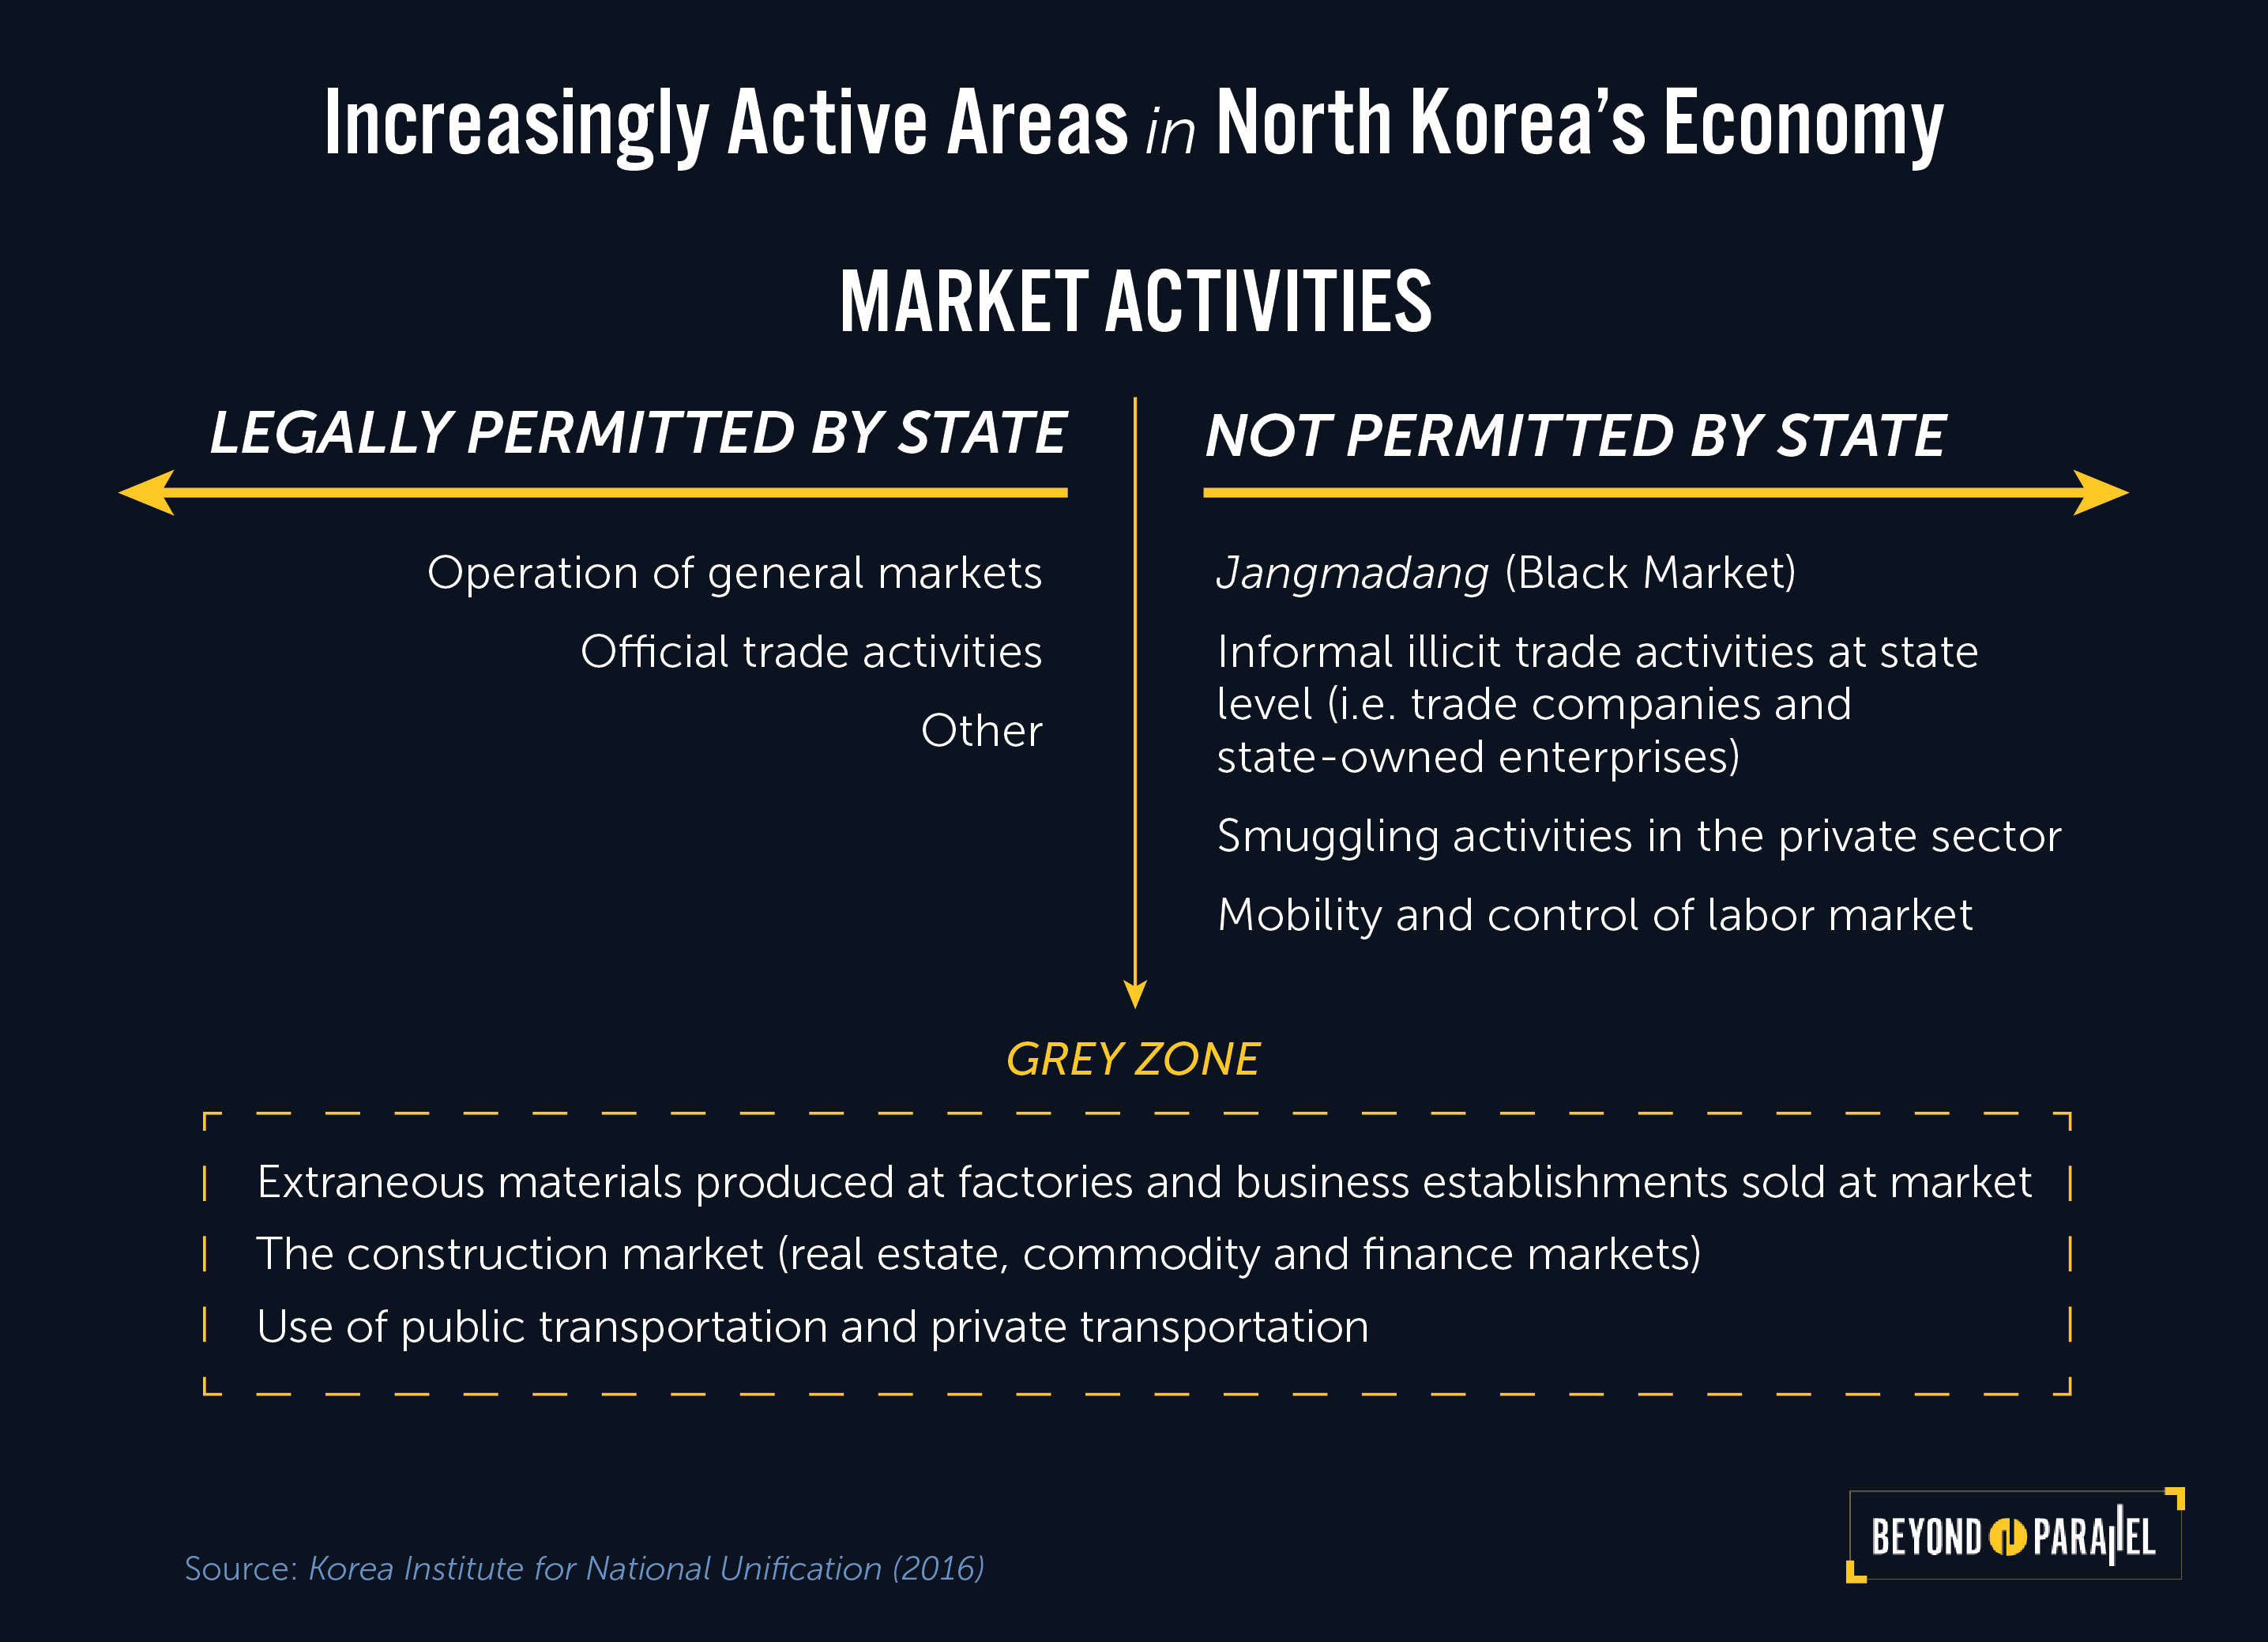  wp-content/uploads/2018/05/NK-Economy-Graphic_1-2.jpg